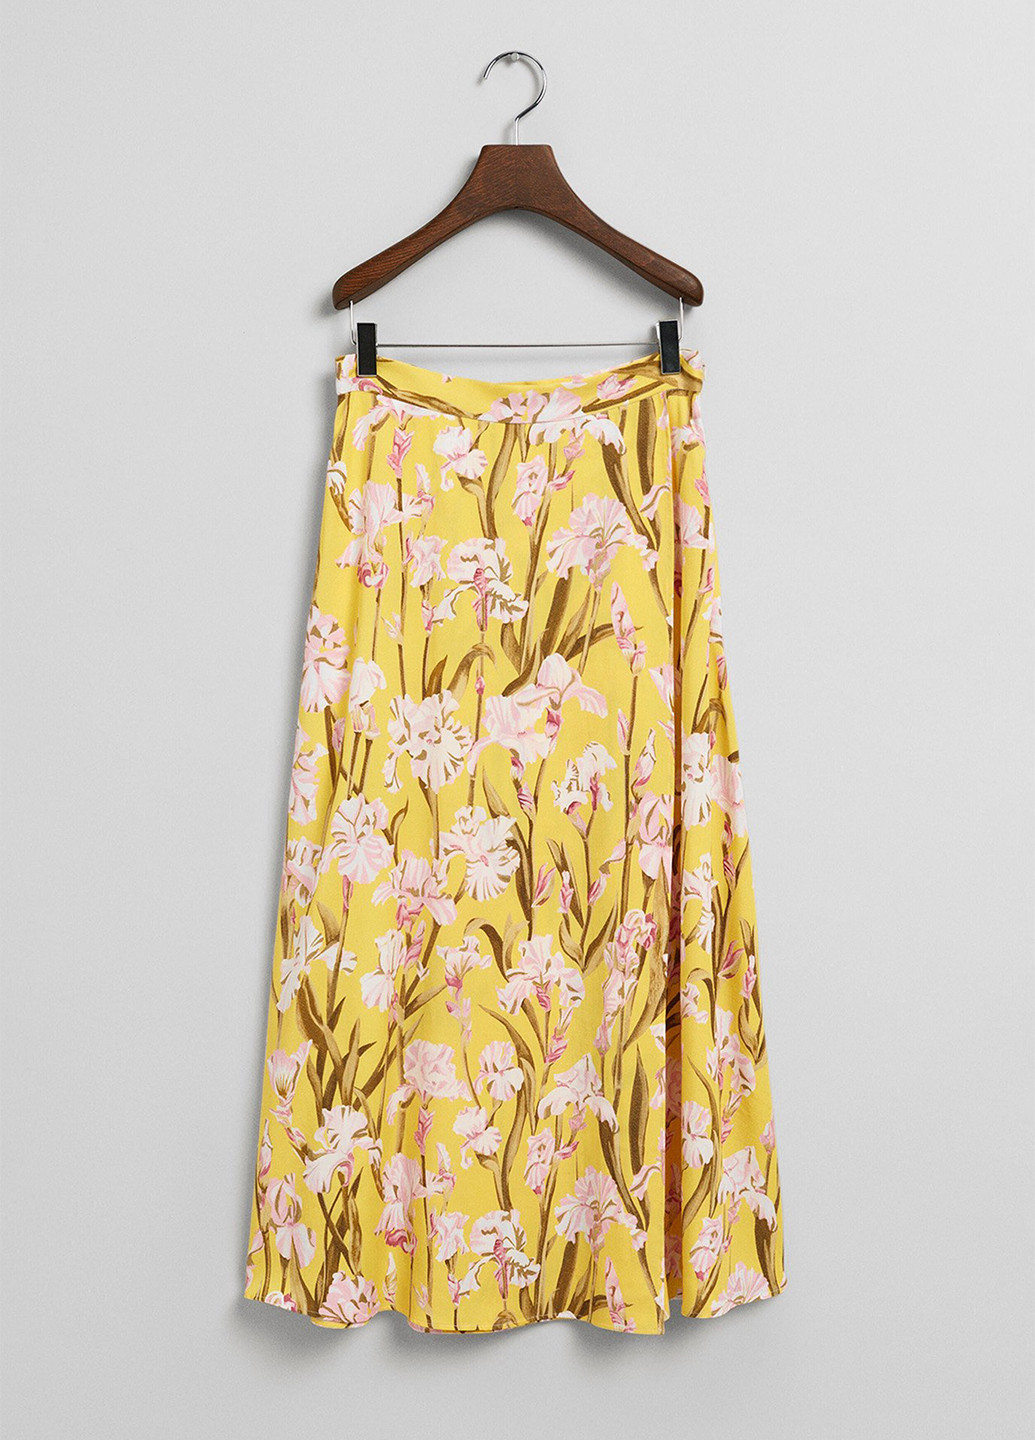 Желтая кэжуал цветочной расцветки юбка Gant а-силуэта (трапеция)